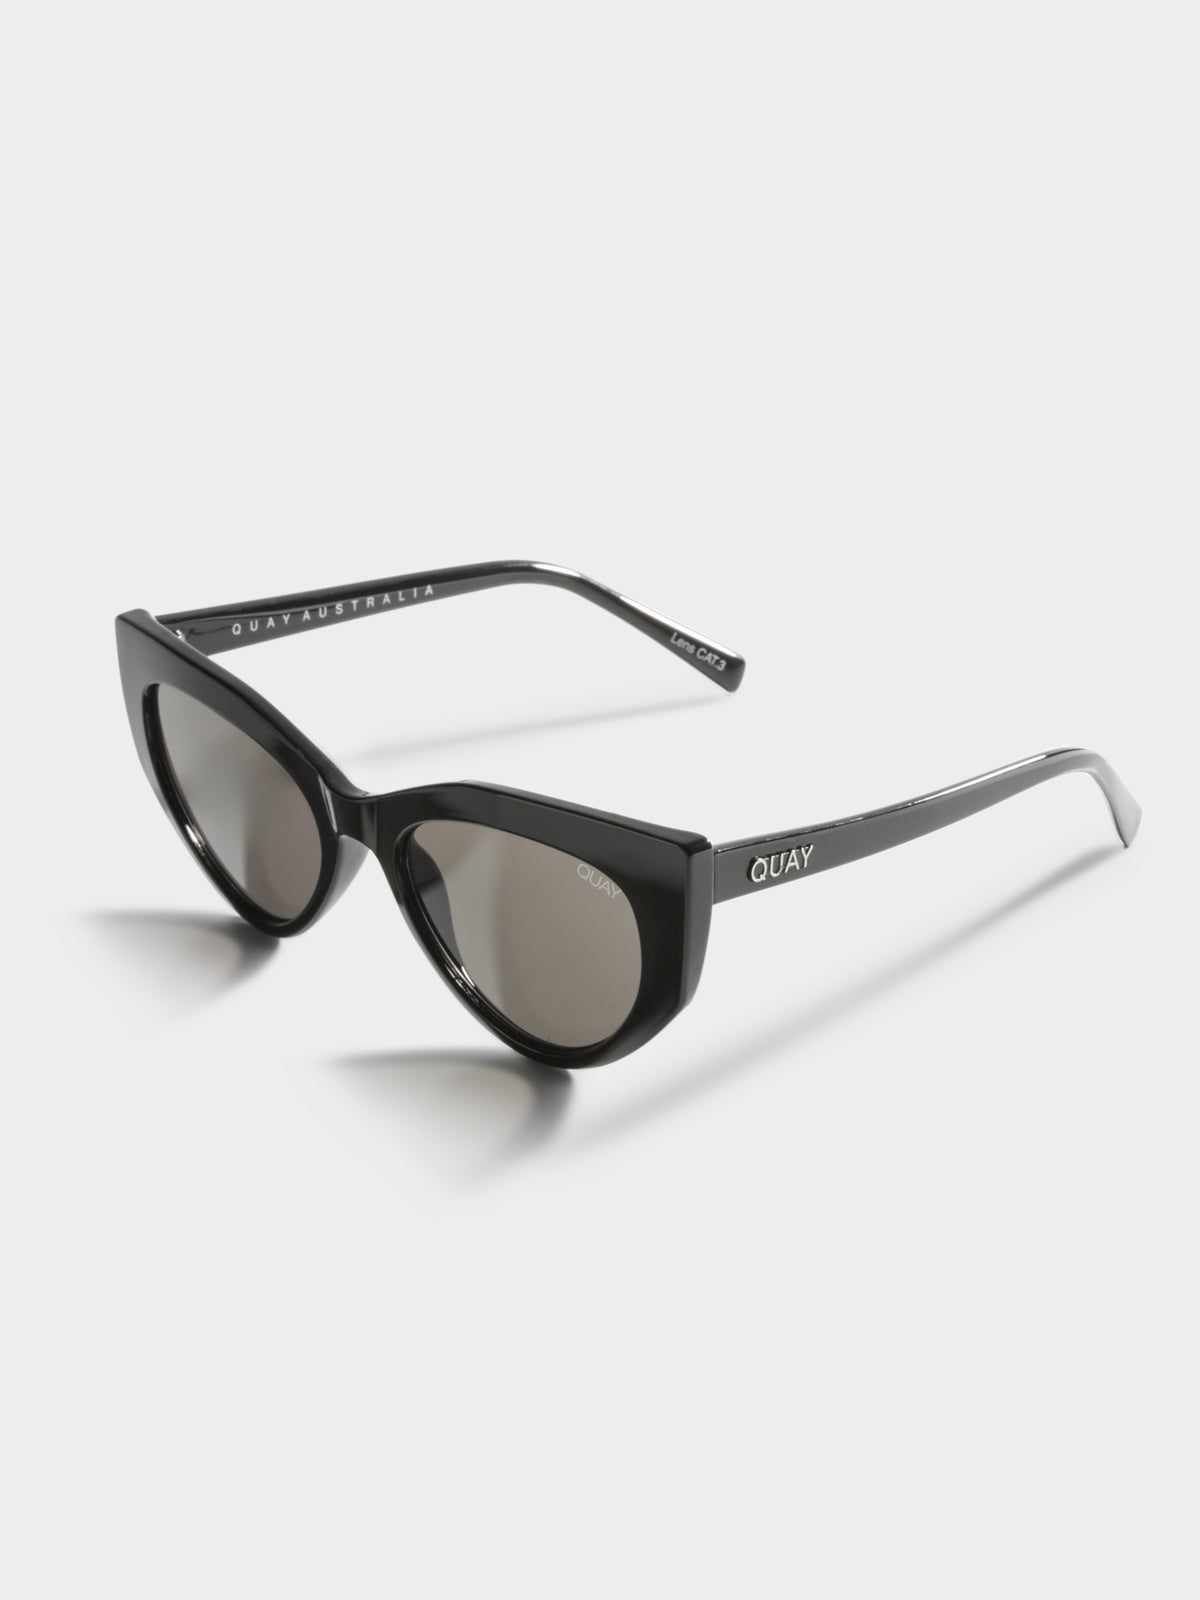 Persuasive Sunglasses in Black &amp; Smoke